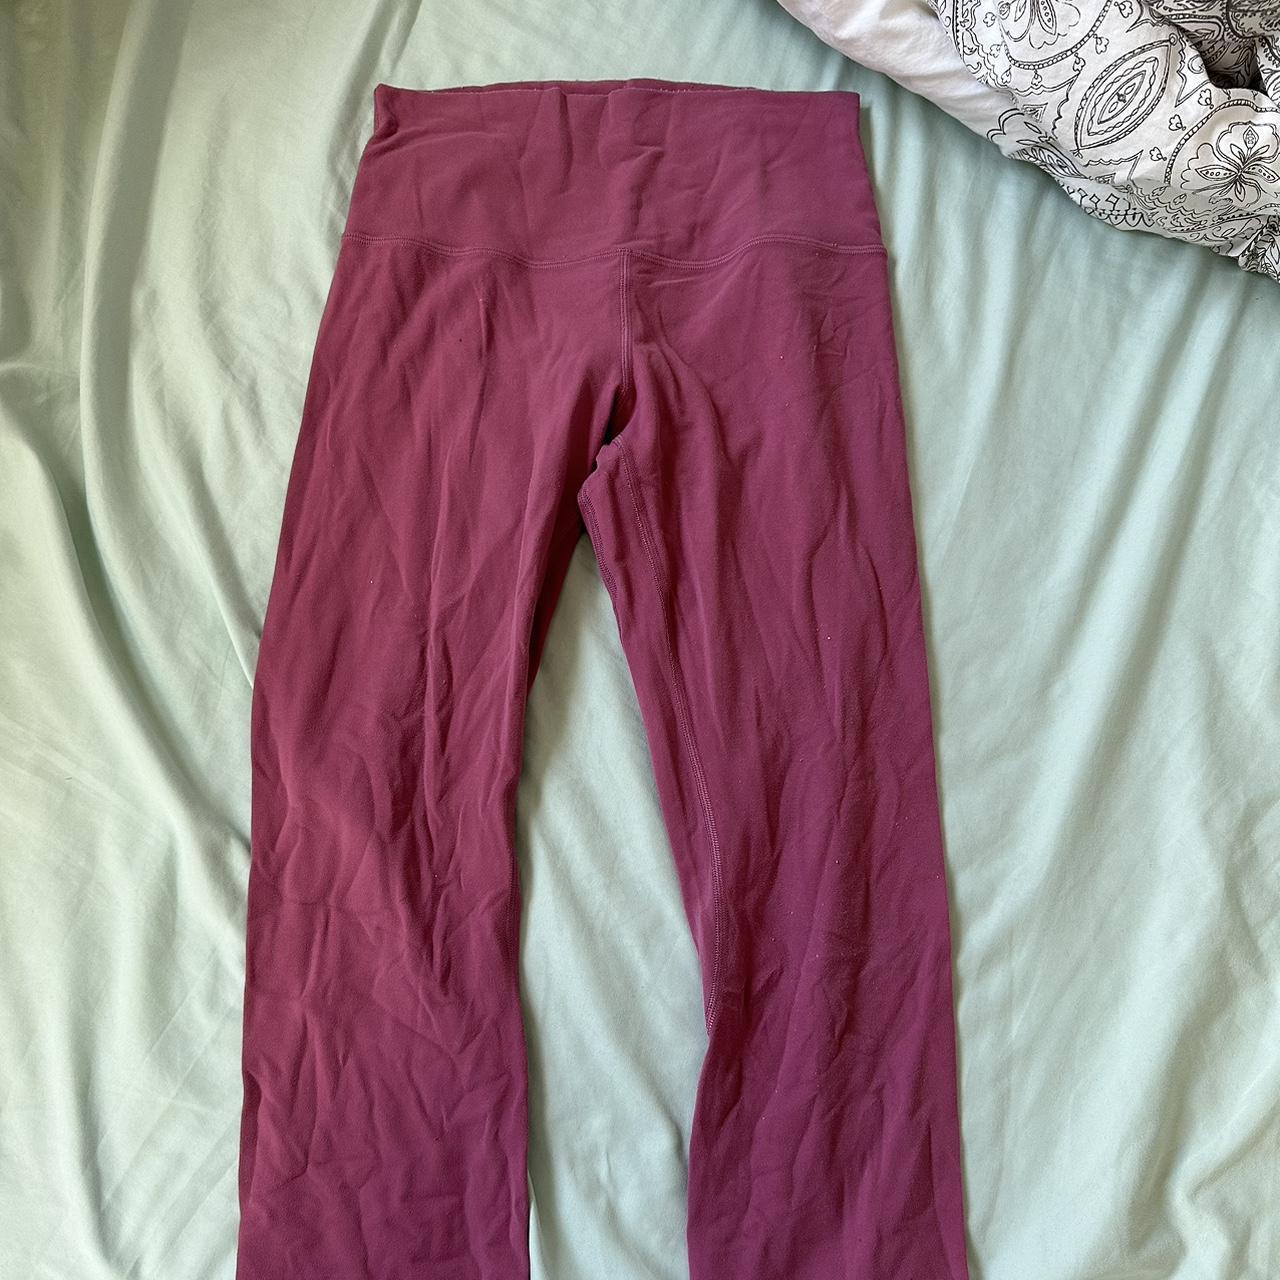 size 4 pink lululemon leggings #lululemon - Depop